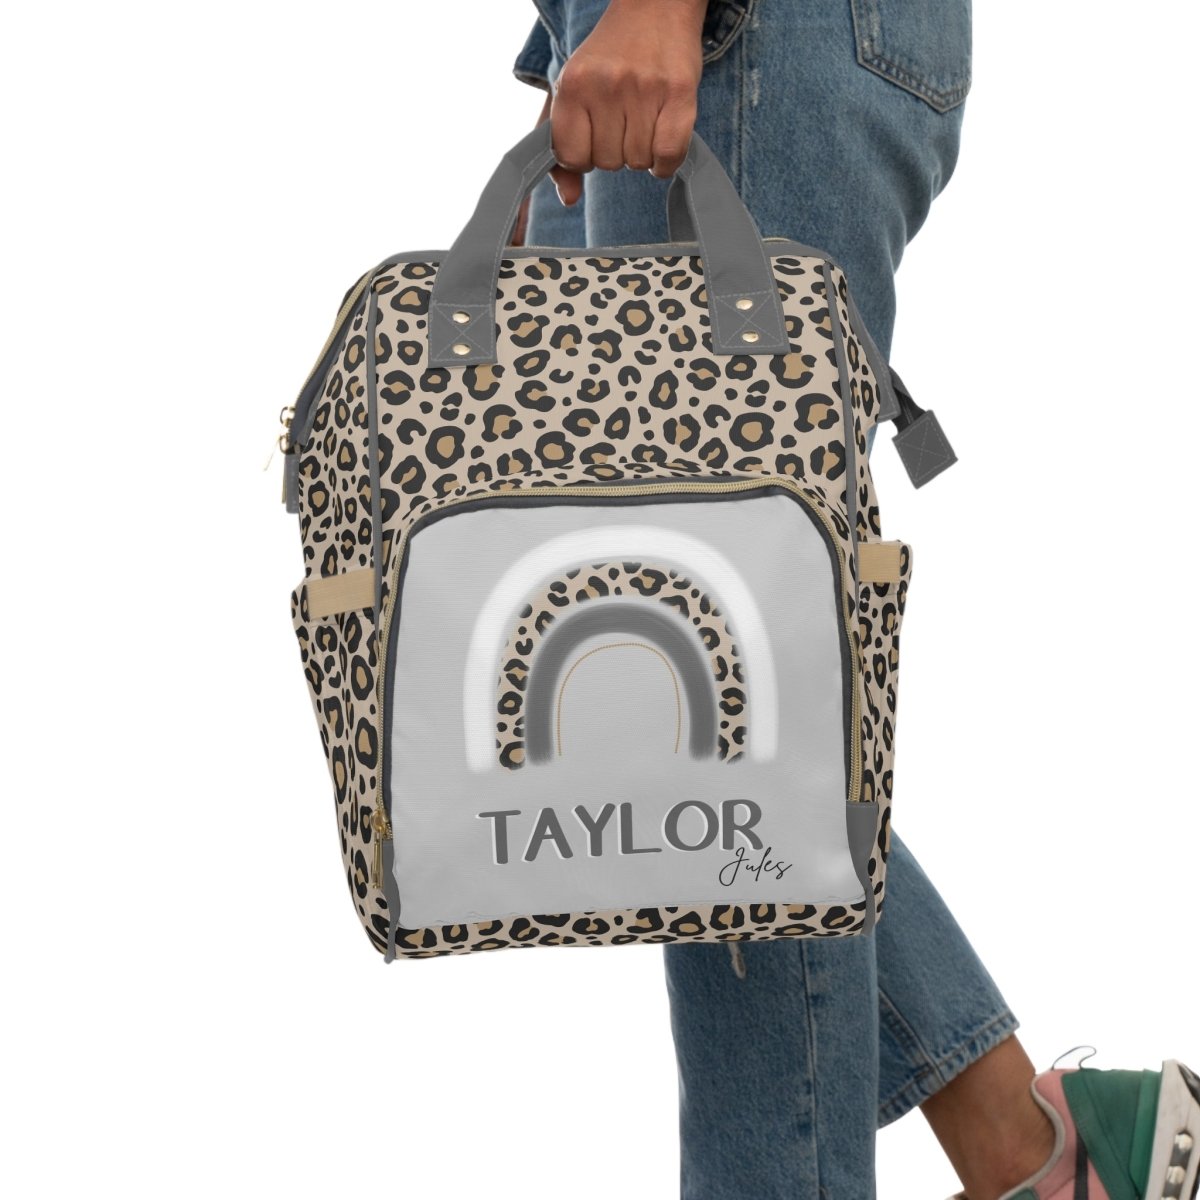 Leopard Rainbow Personalized Backpack Diaper Bag - gender_boy, gender_girl, gender_neutral